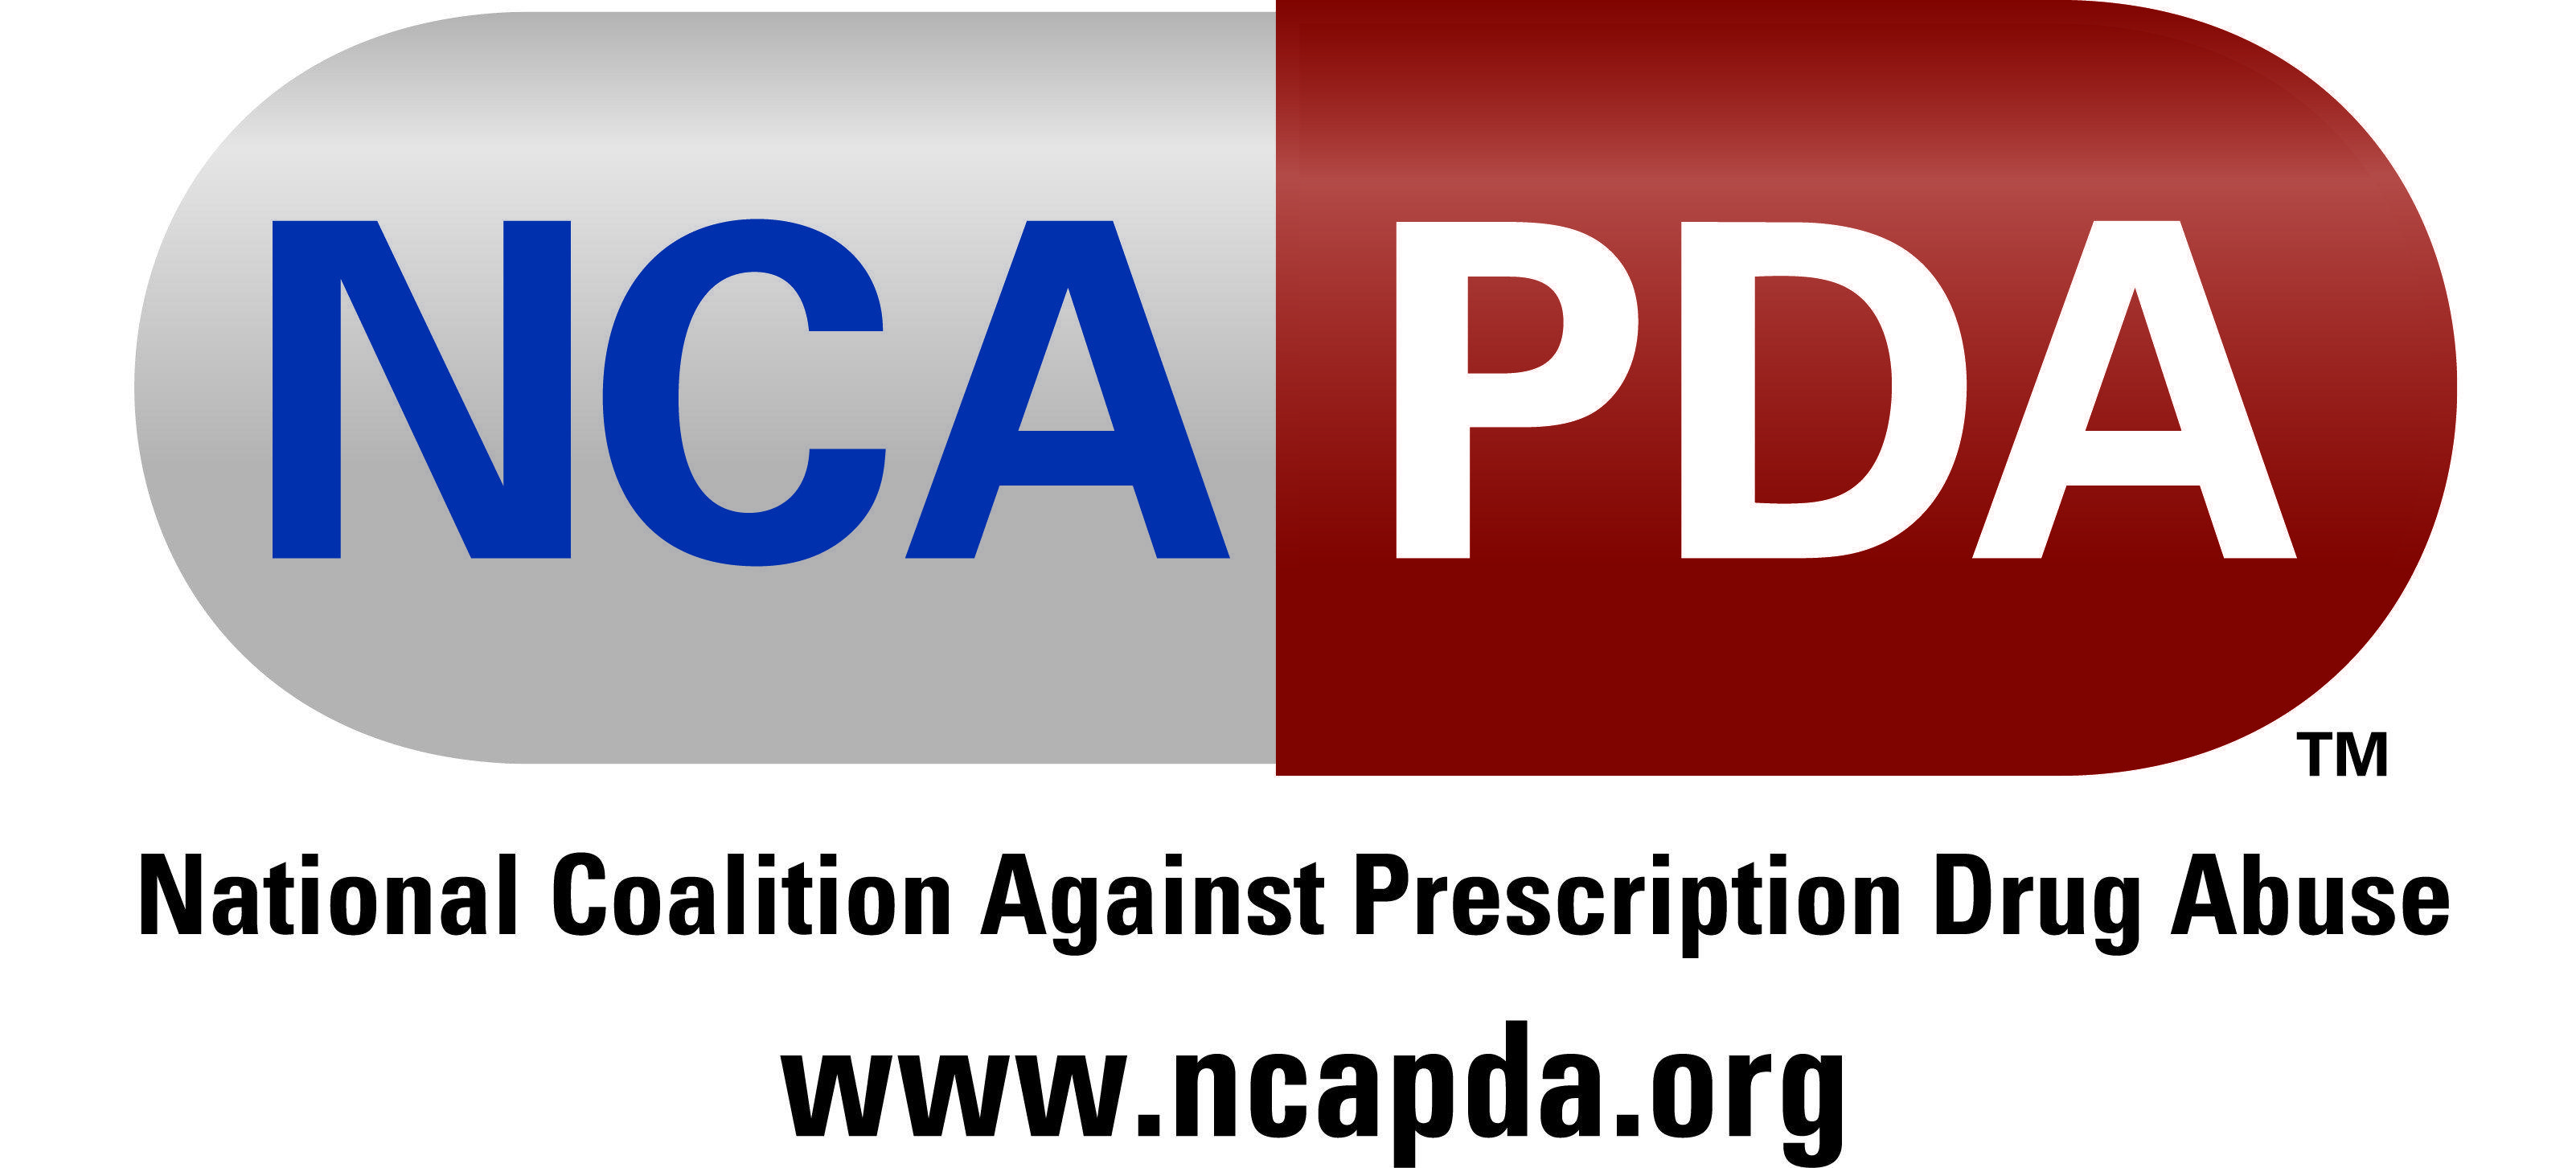 Abuse Logo - Image Gallery | National Coalition Against Prescription Drug Abuse